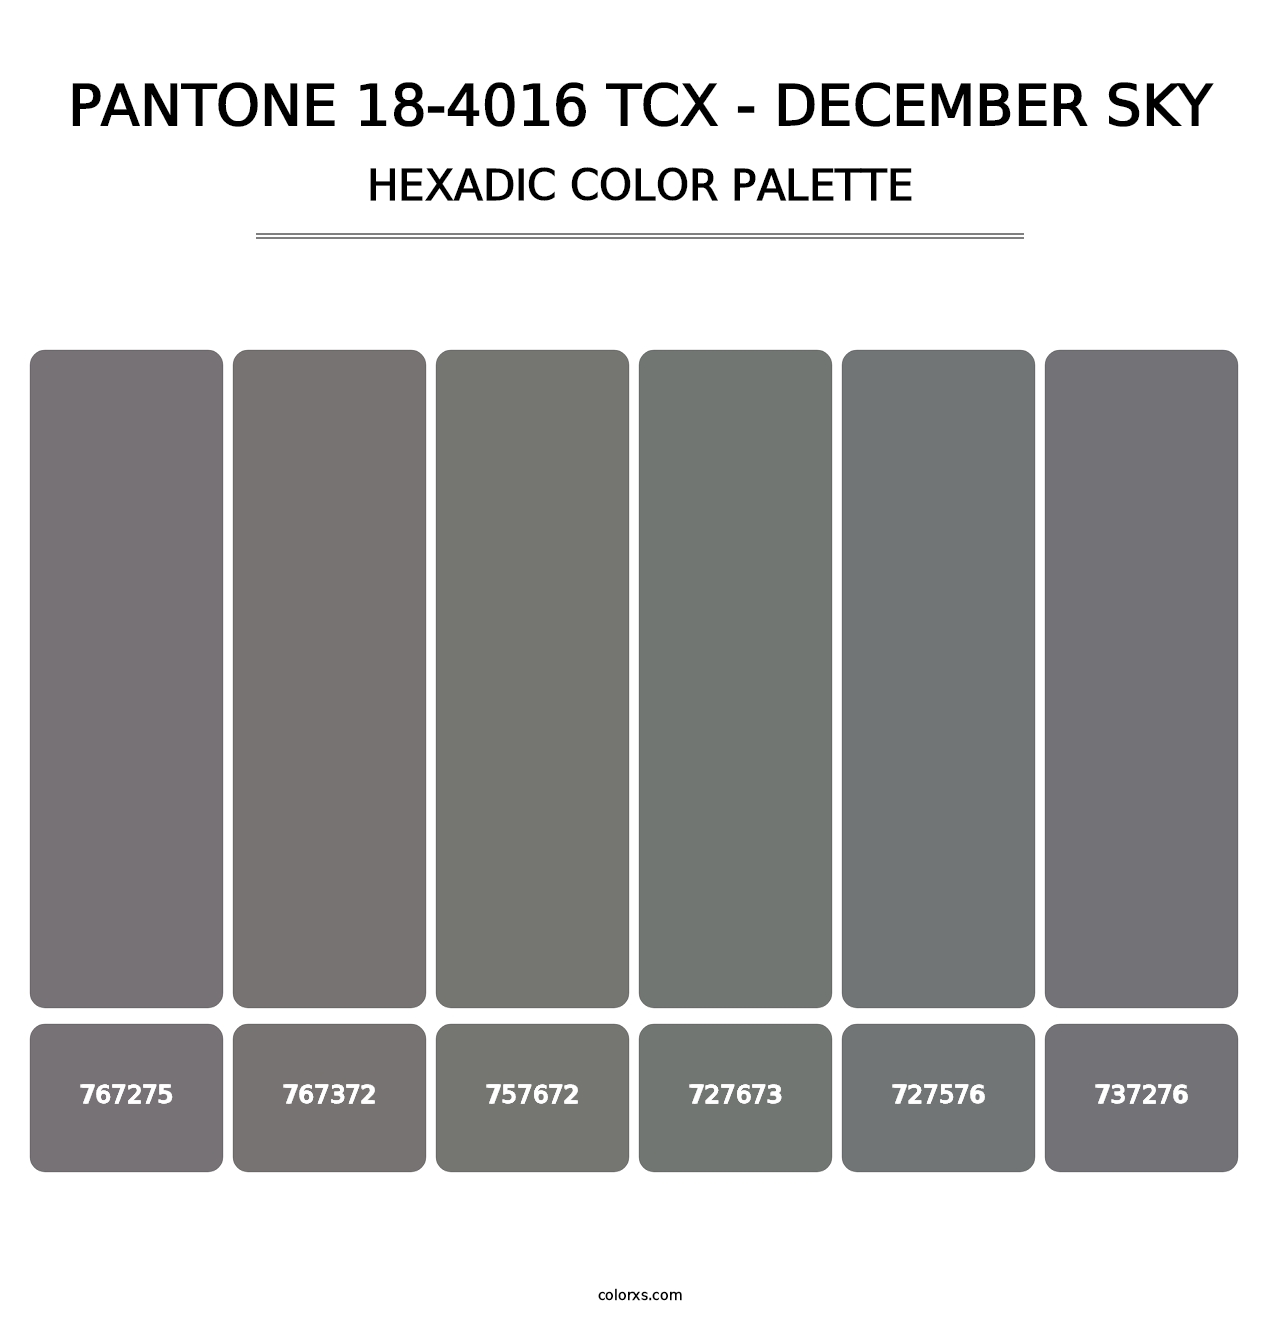 PANTONE 18-4016 TCX - December Sky - Hexadic Color Palette